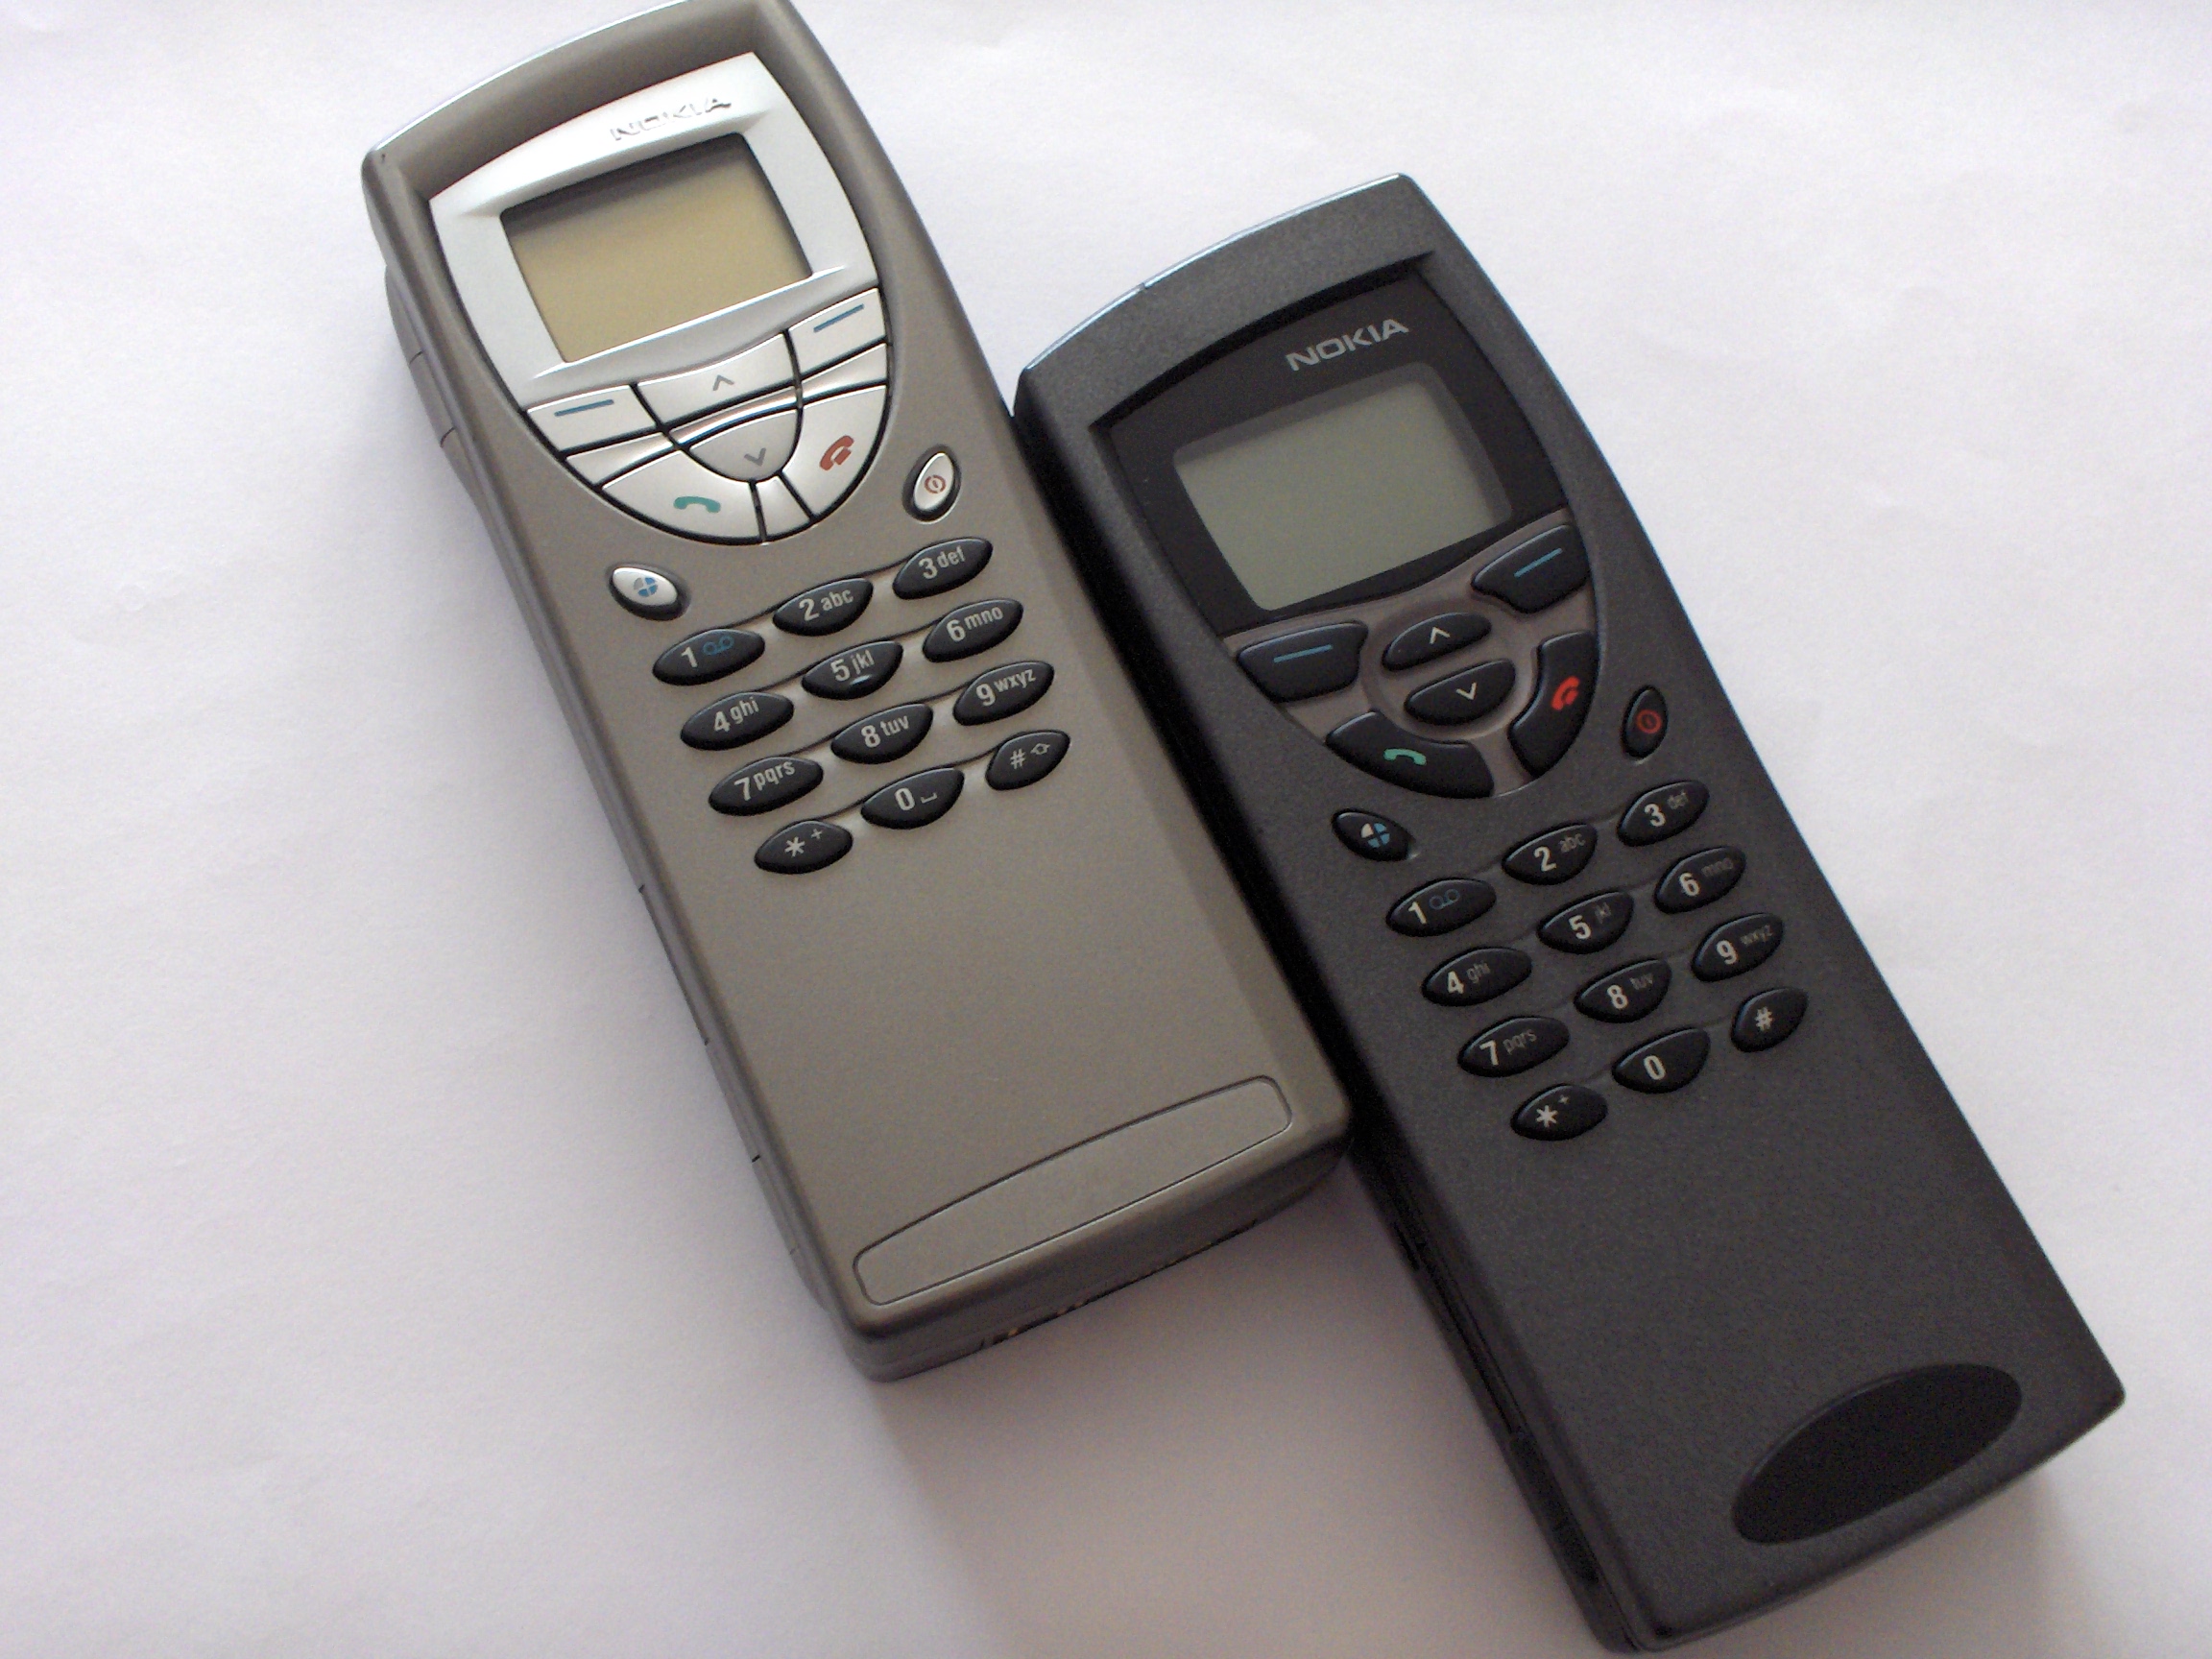 Nokia_9210_and_9110.JPG